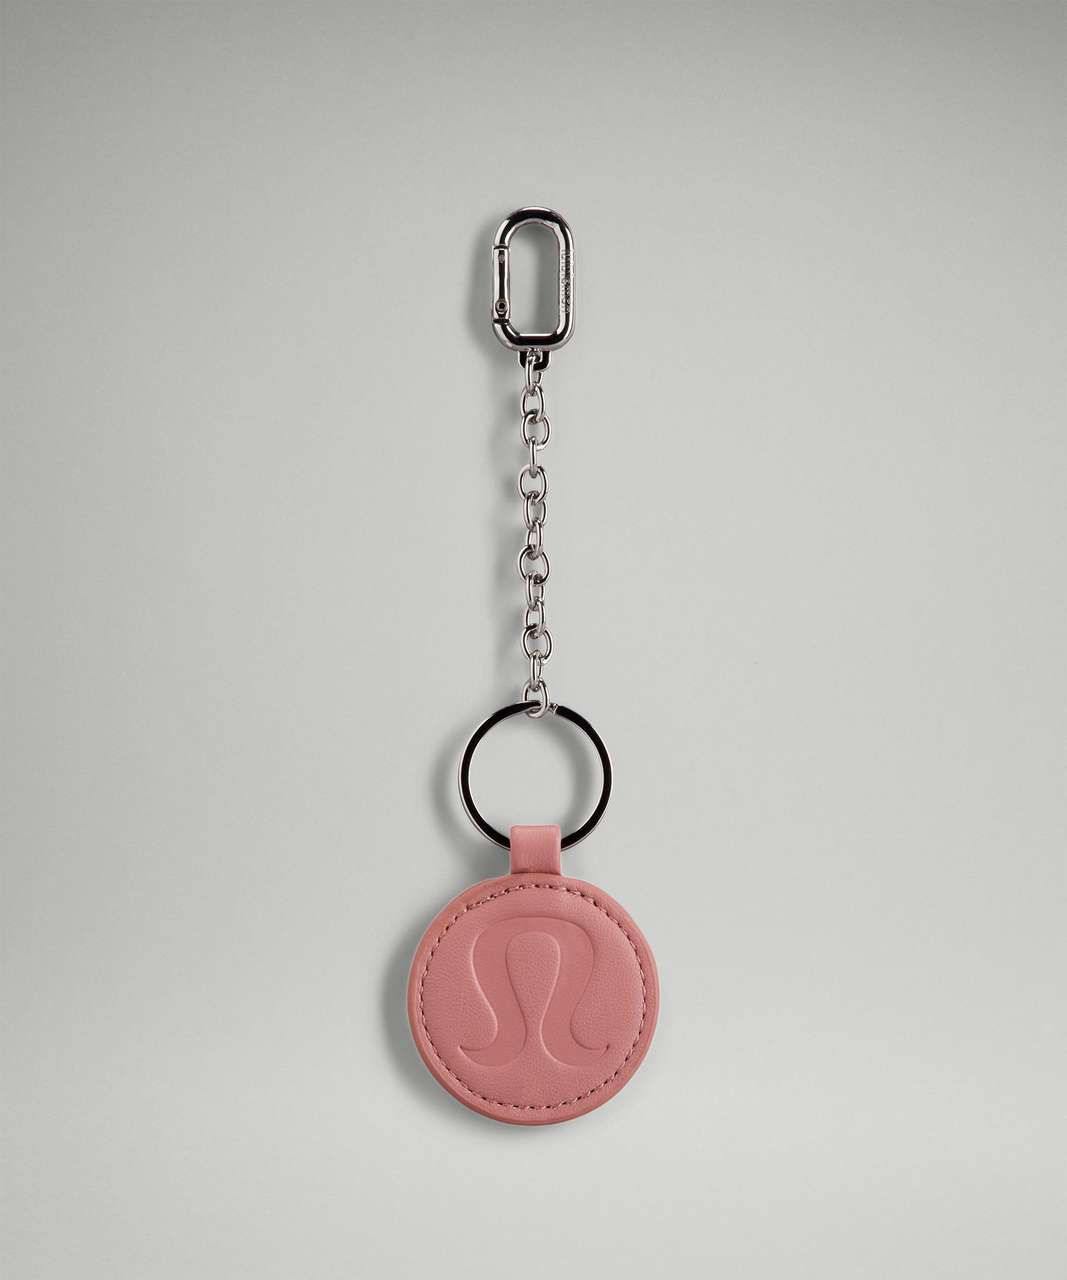 Lululemon Key Moments Keychain *Mini - Pink Pastel